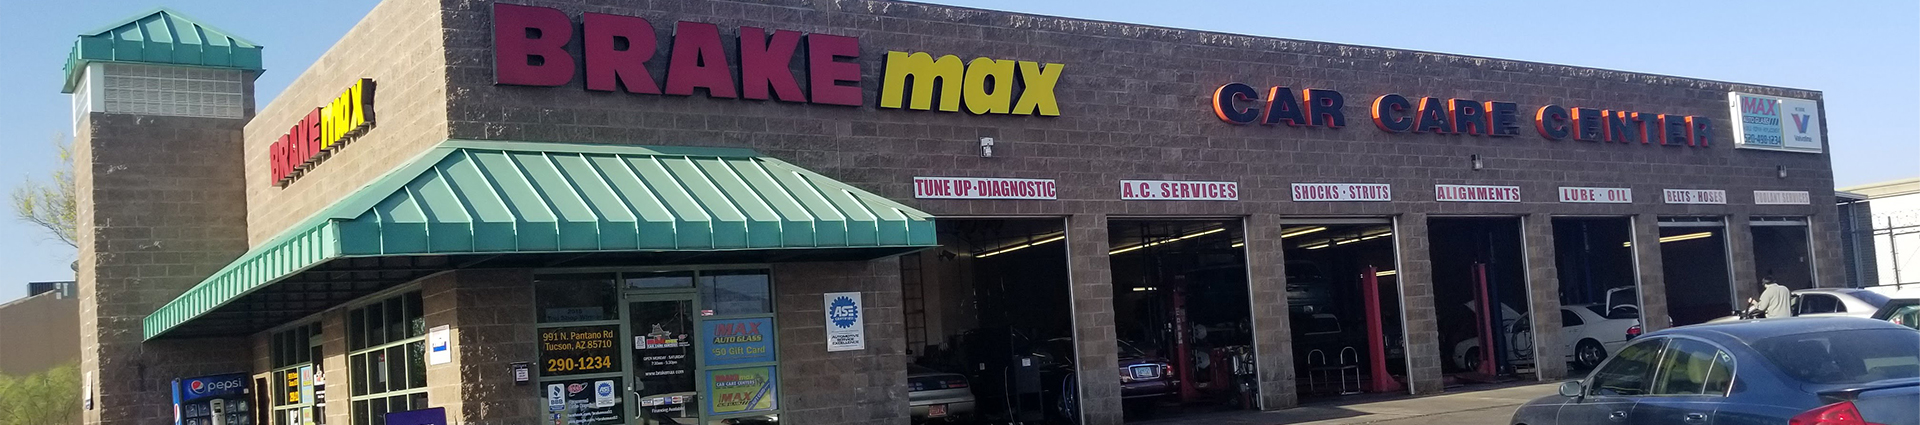 brakemax storefront